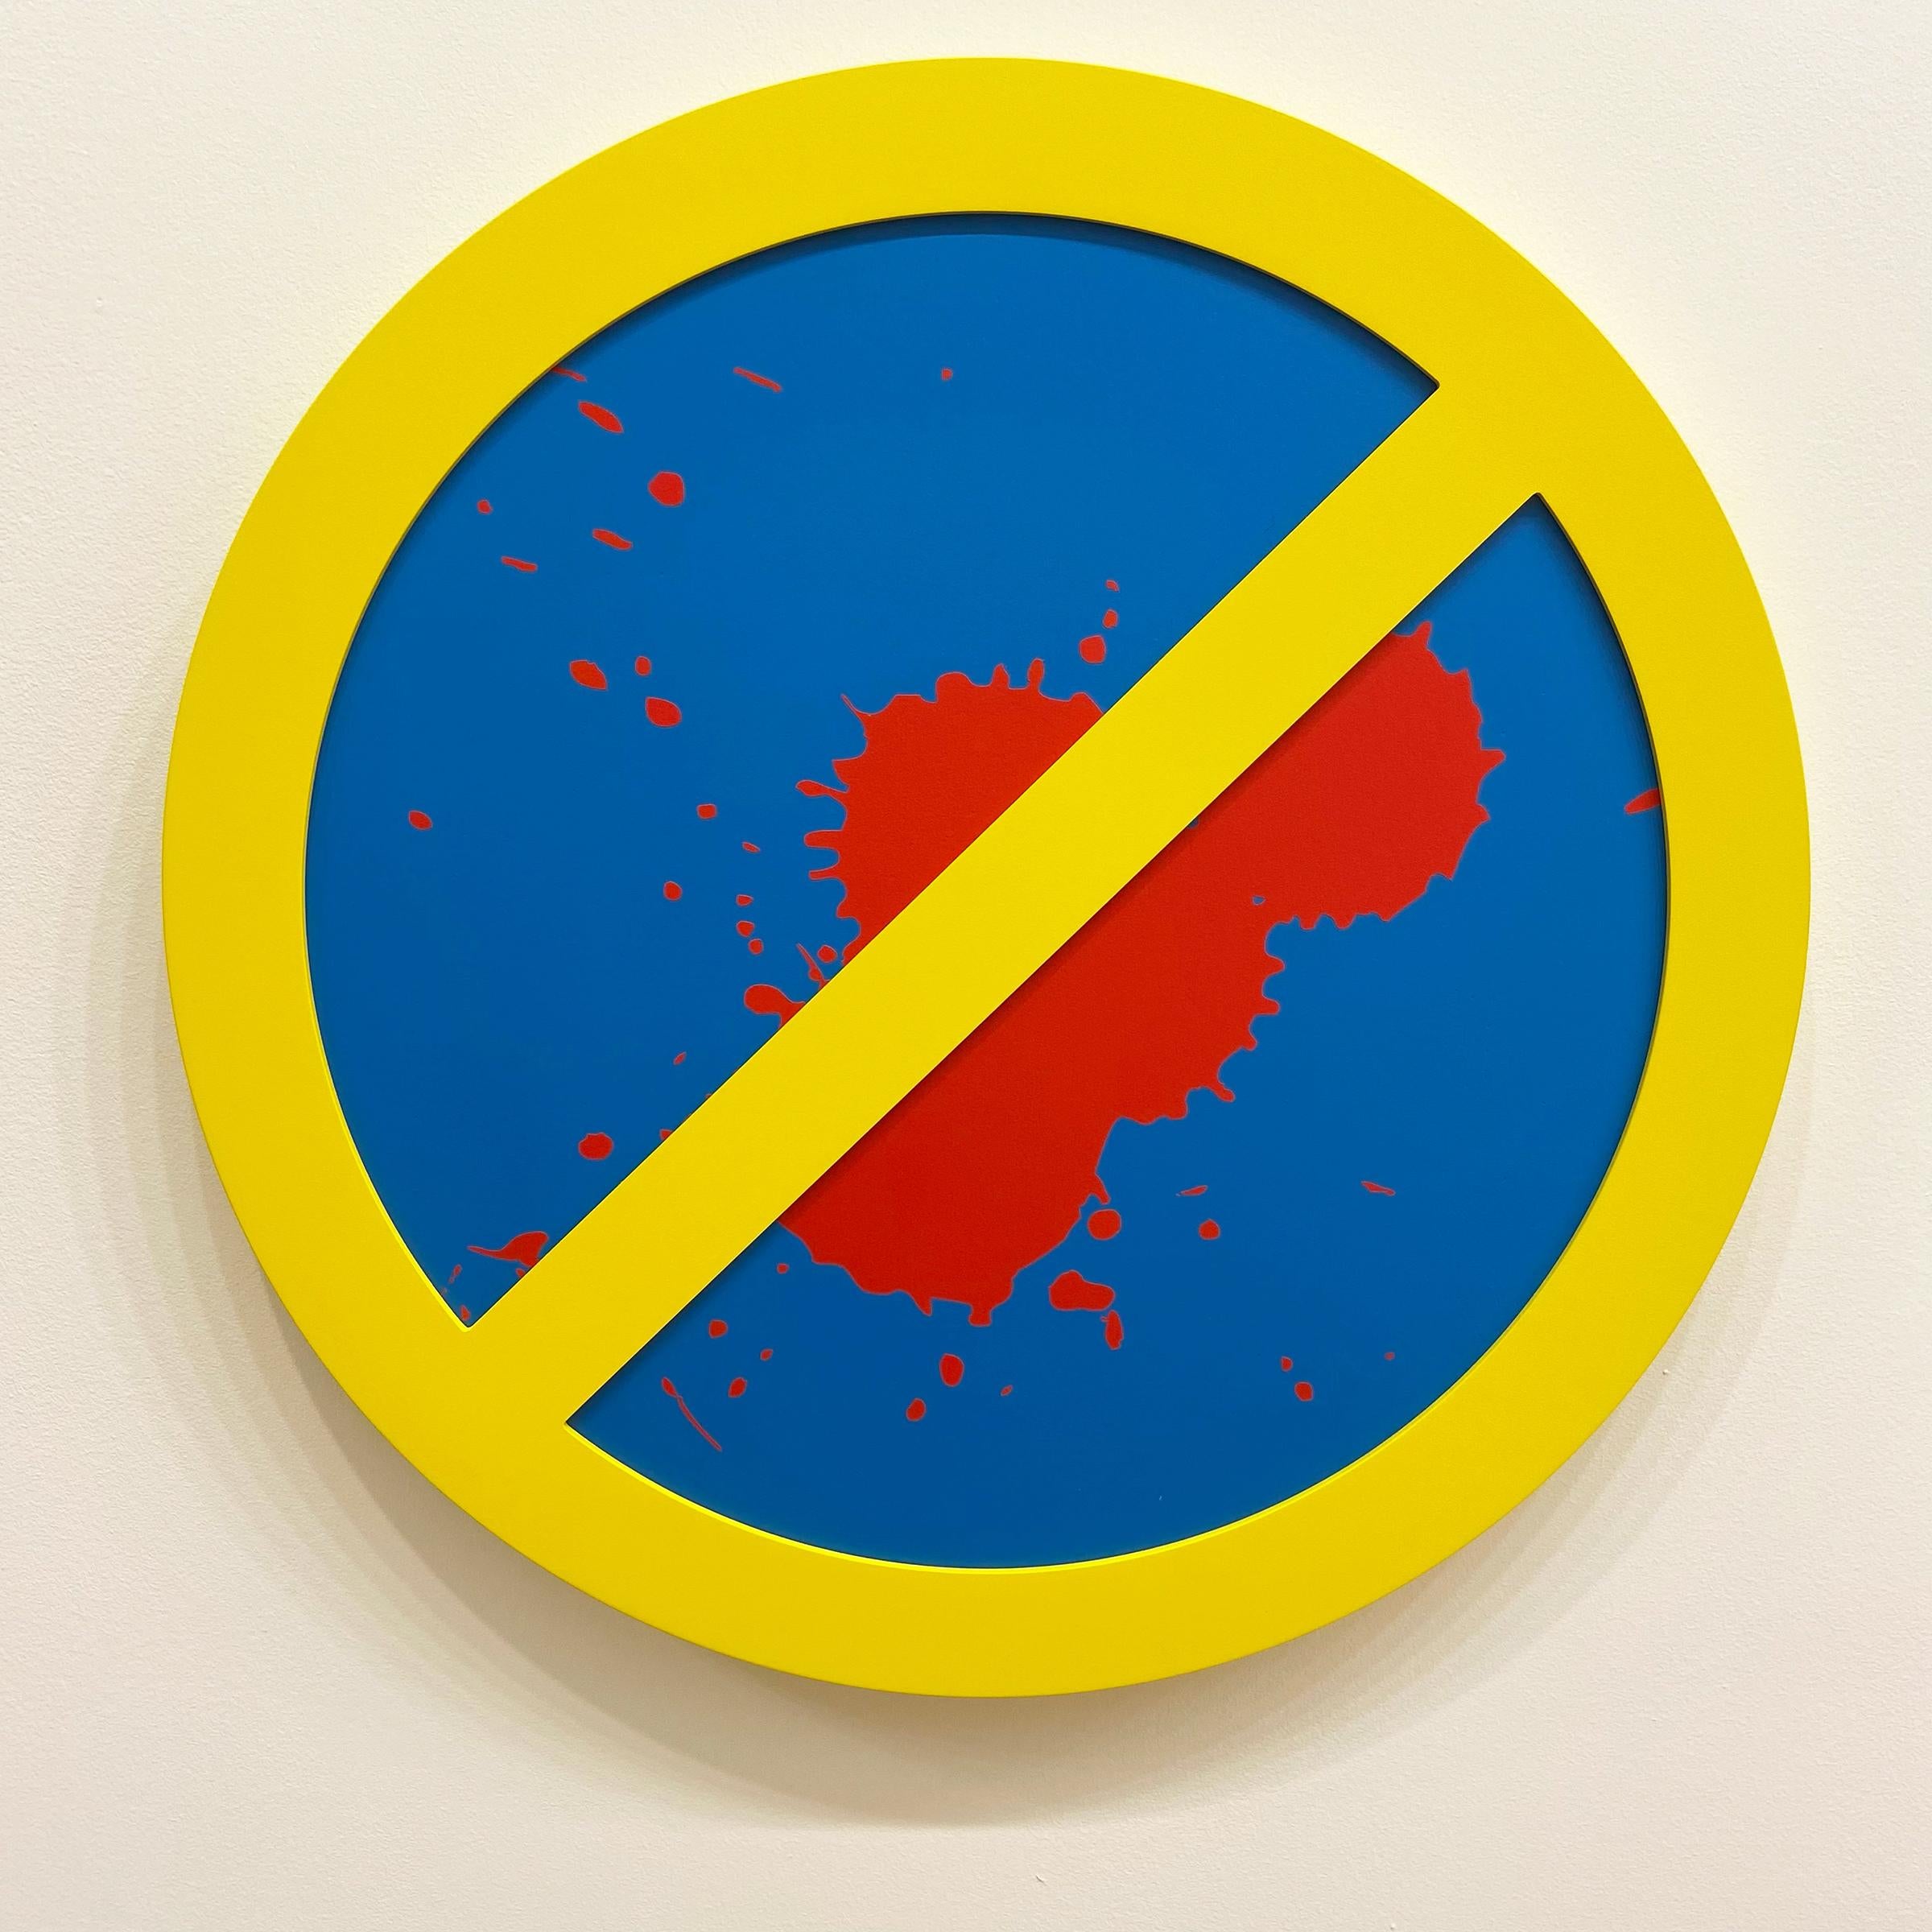 Michael Porten Portrait Painting - "No Porten (Red on Blue)" - conceptual art, wall sculpture - Lawrence Weiner